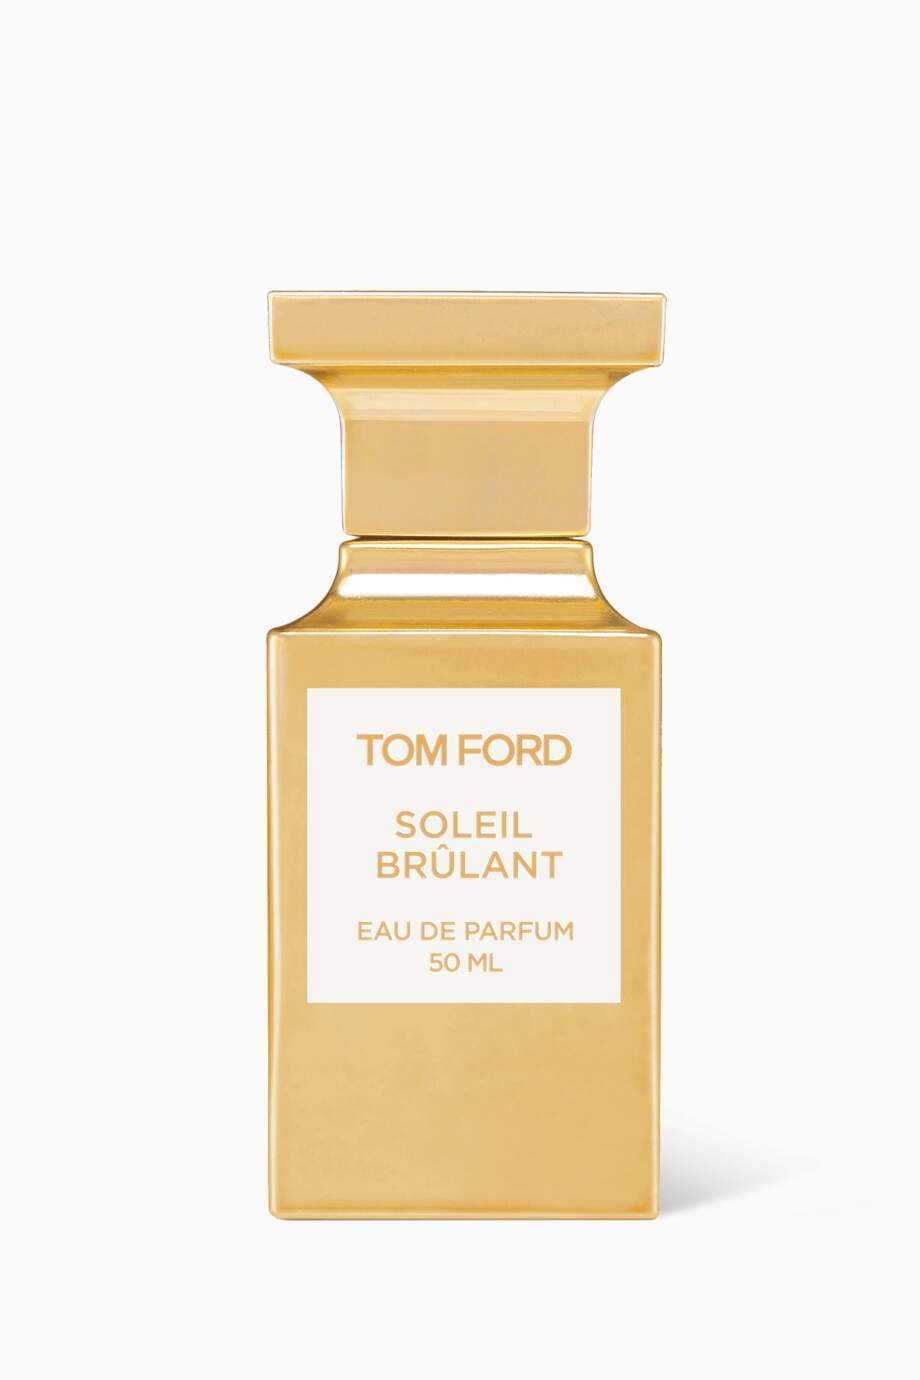 Tom Ford Soleil Brulant - Eau De Parfum 50ml